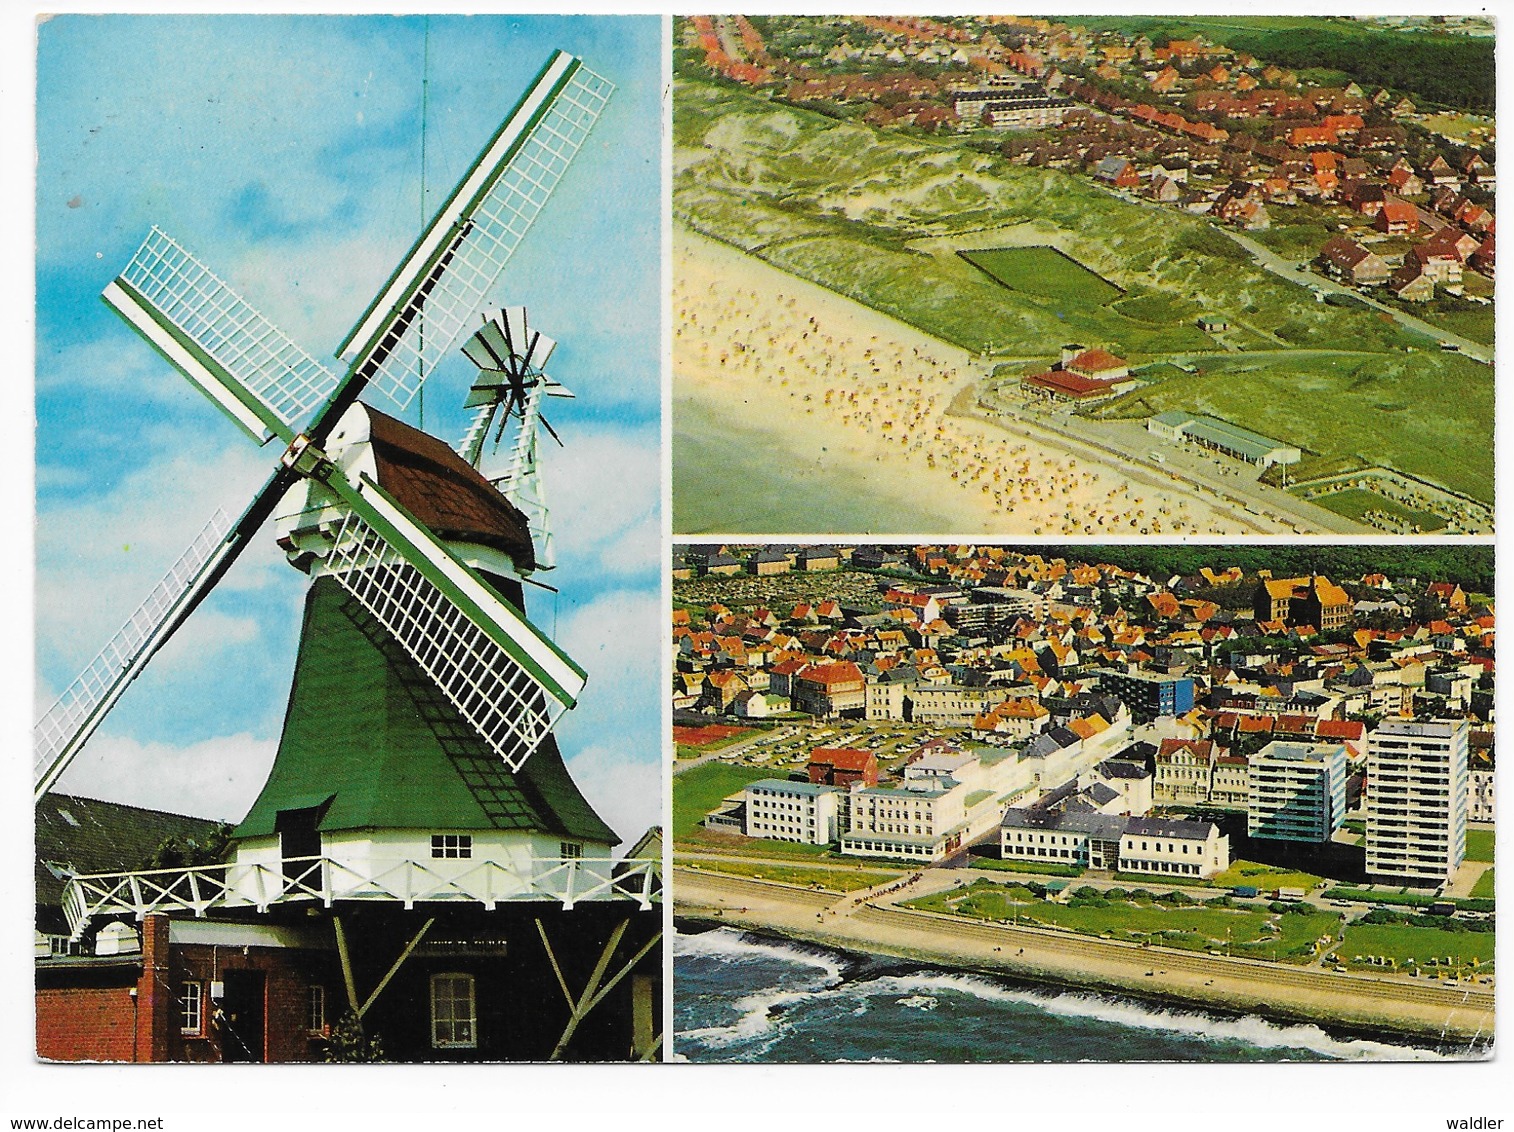 2982  NORDSEEBAD NORDERNEY  -  MEHRBILD   1977 - Norderney